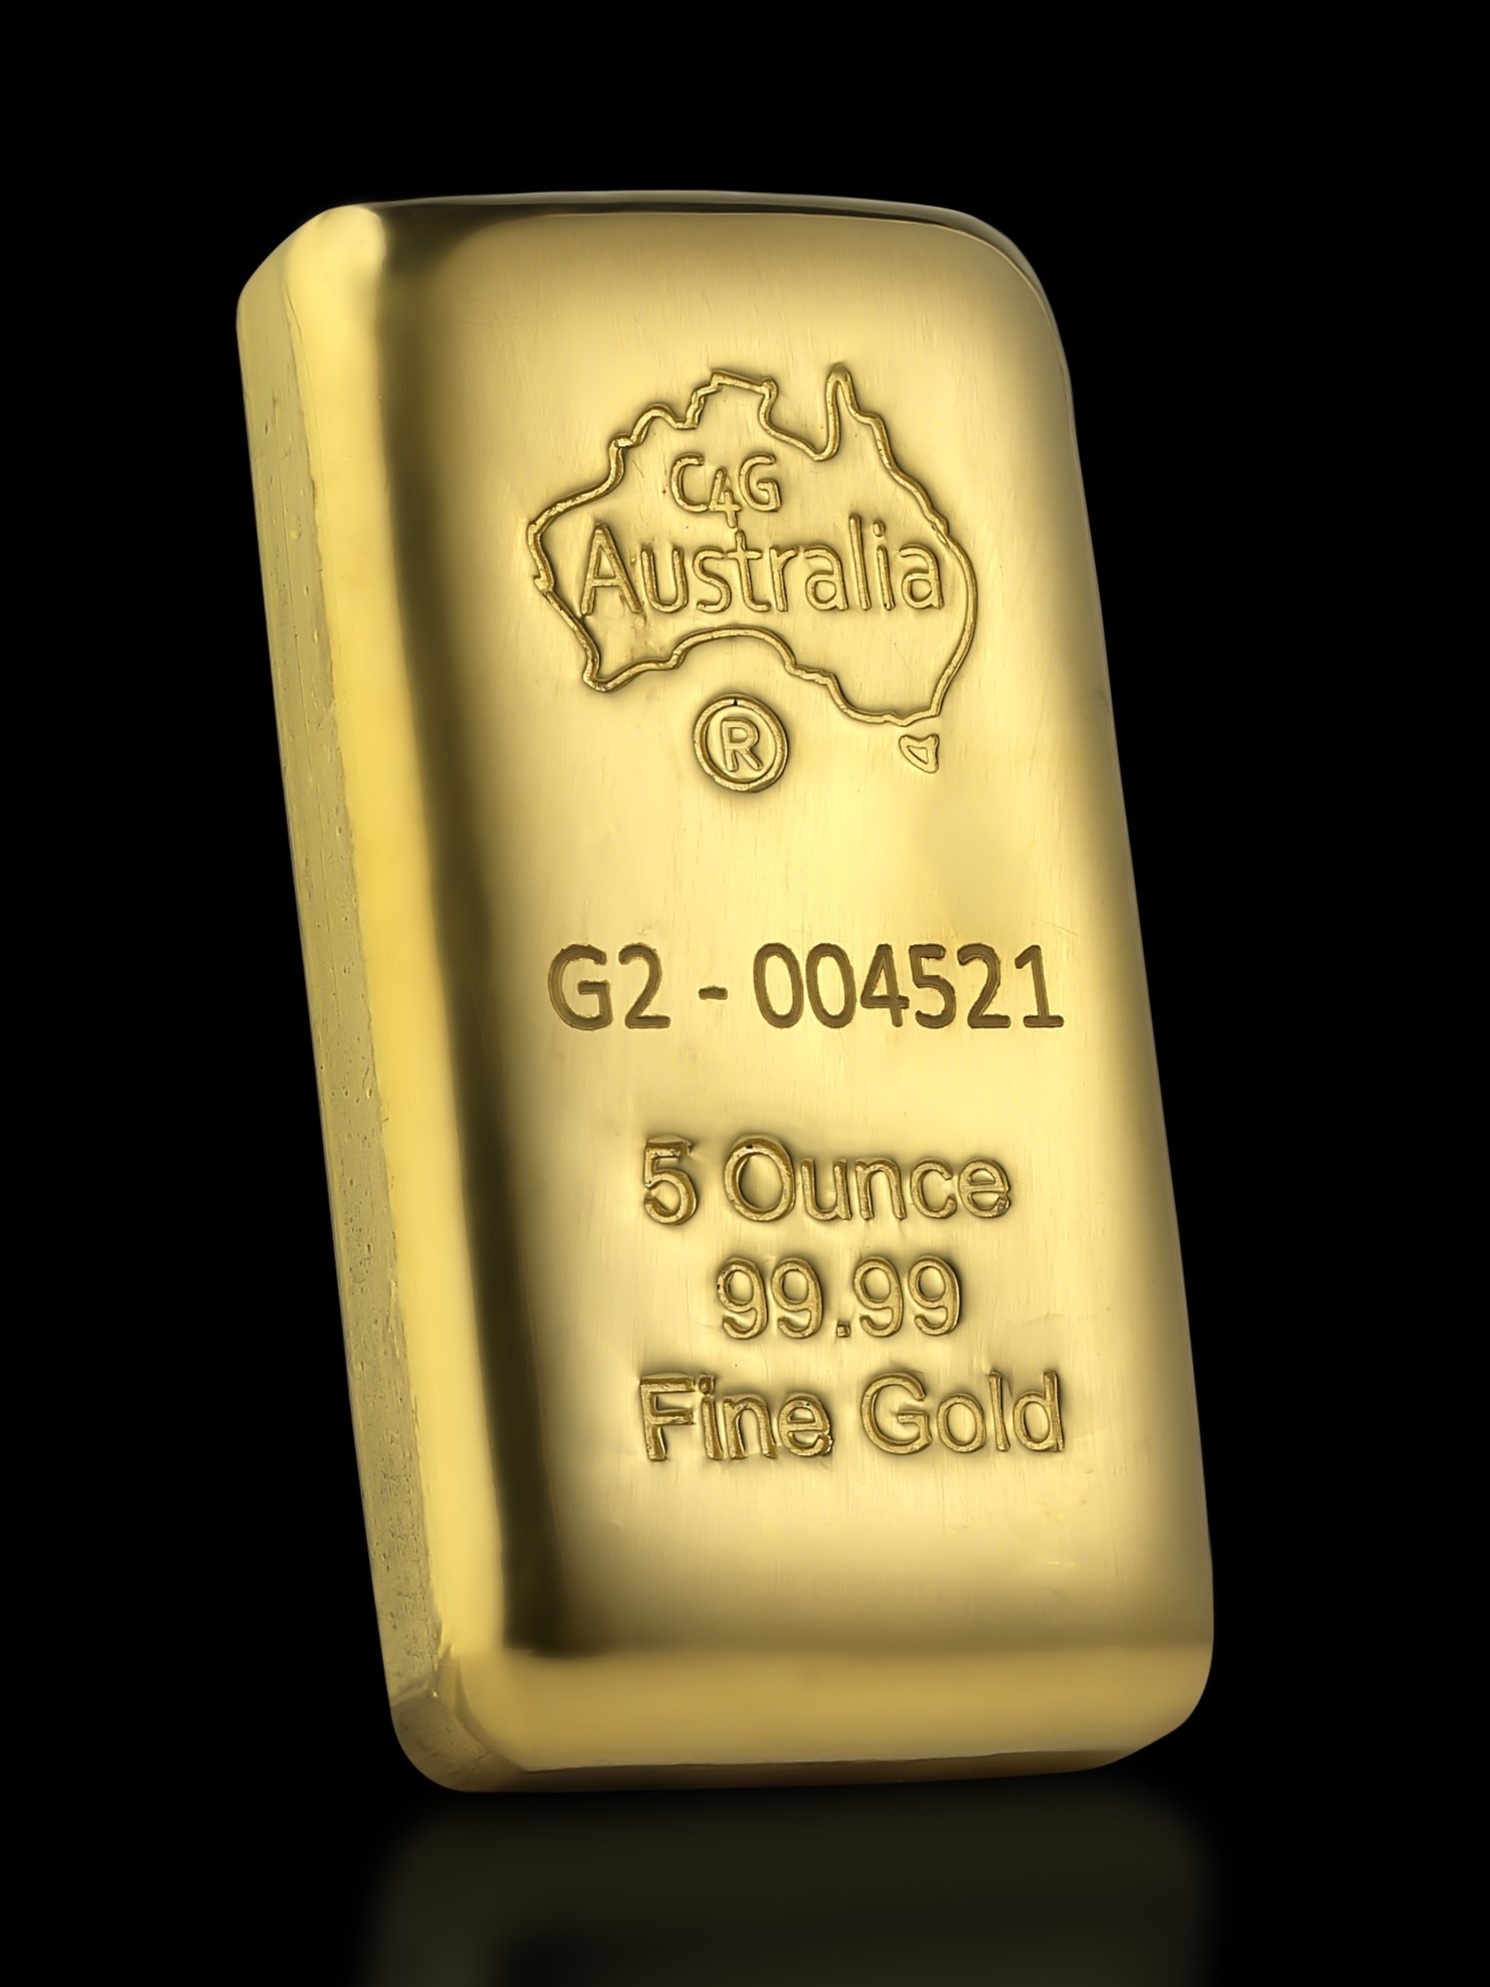 5 oz  C4G Cast Gold Bullion 99.99% Pure